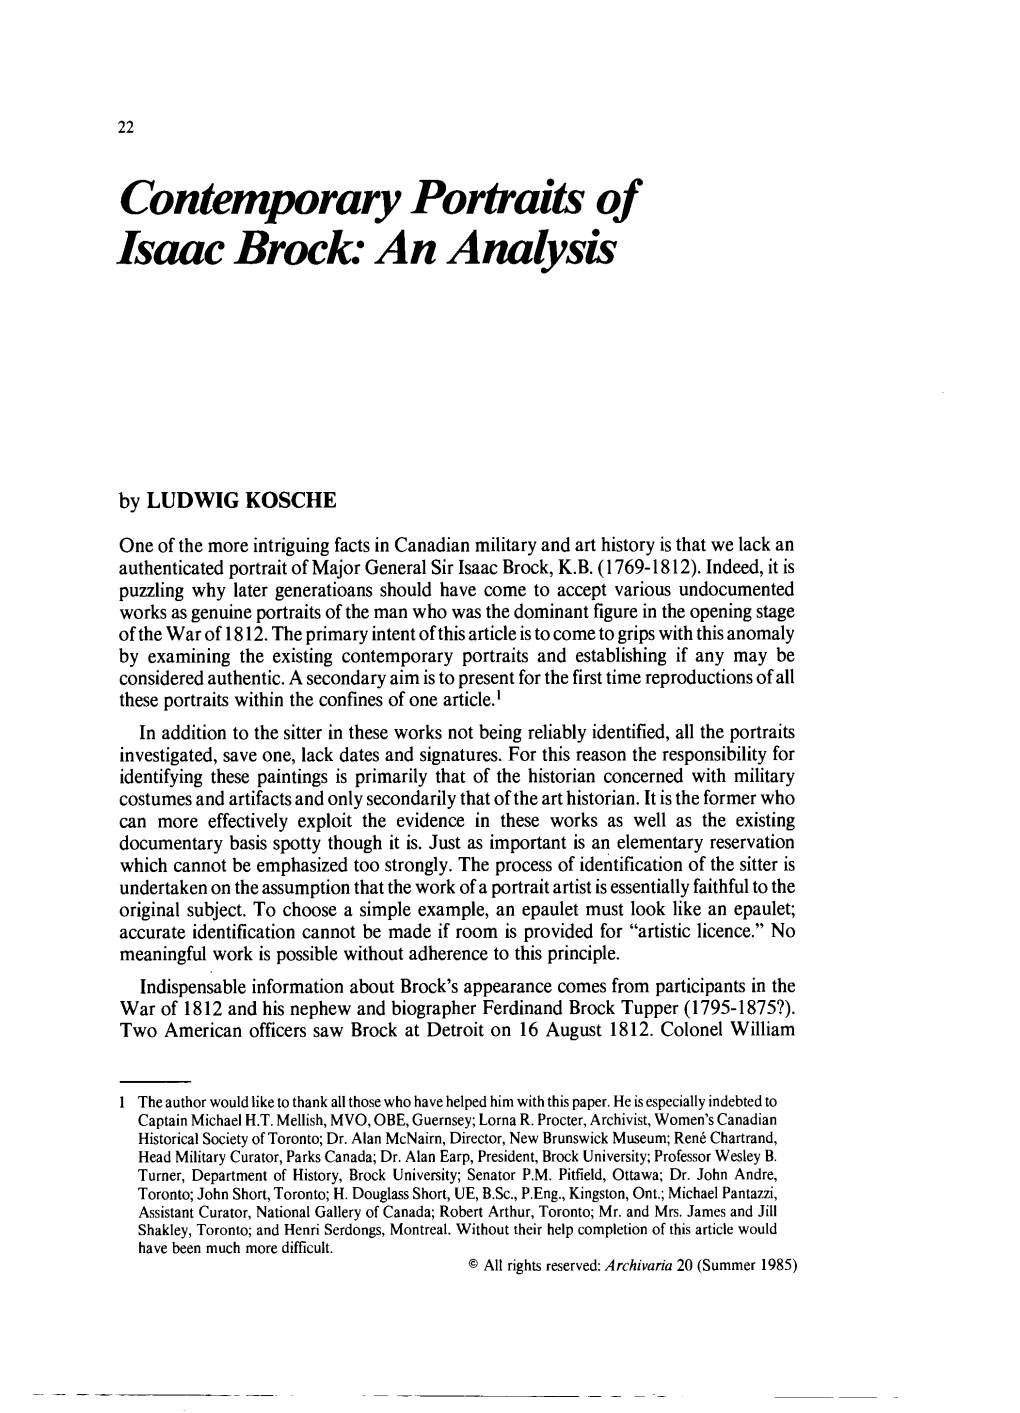 Contemporary Porbaits of Isaac Brock: an Amlysis